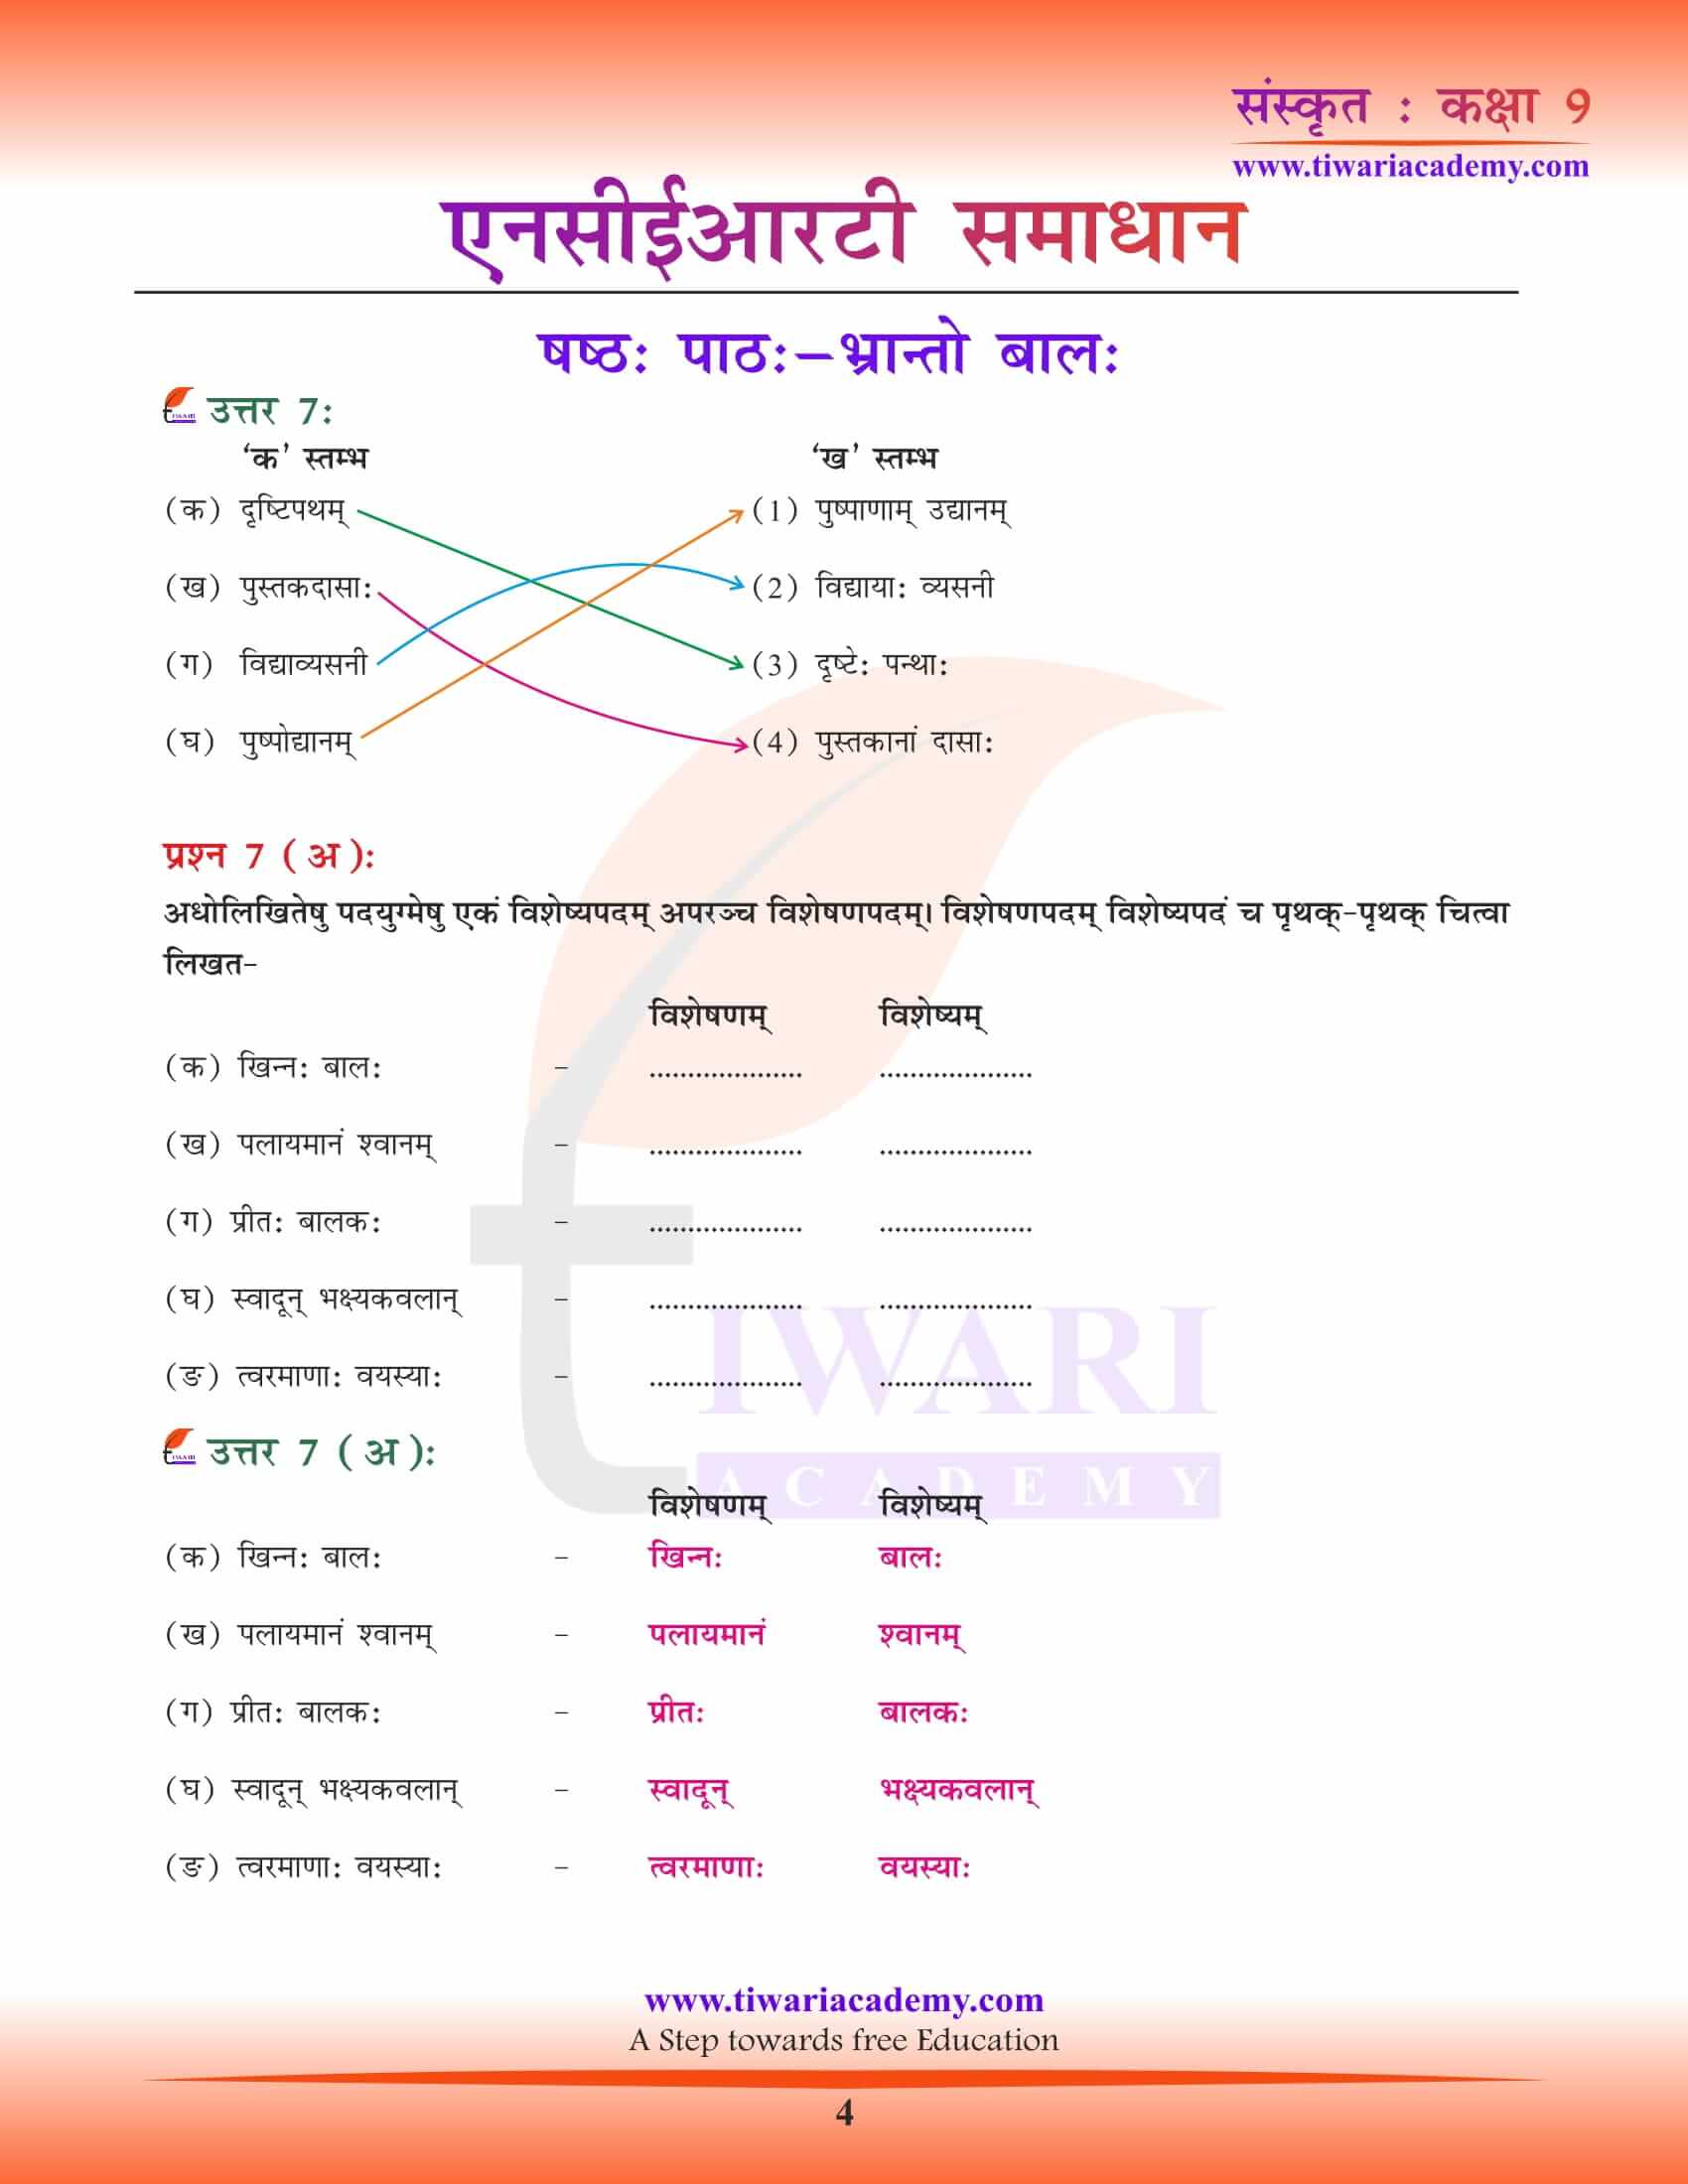 NCERT Solutions for Class 9 Sanskrit Chapter 6 free download